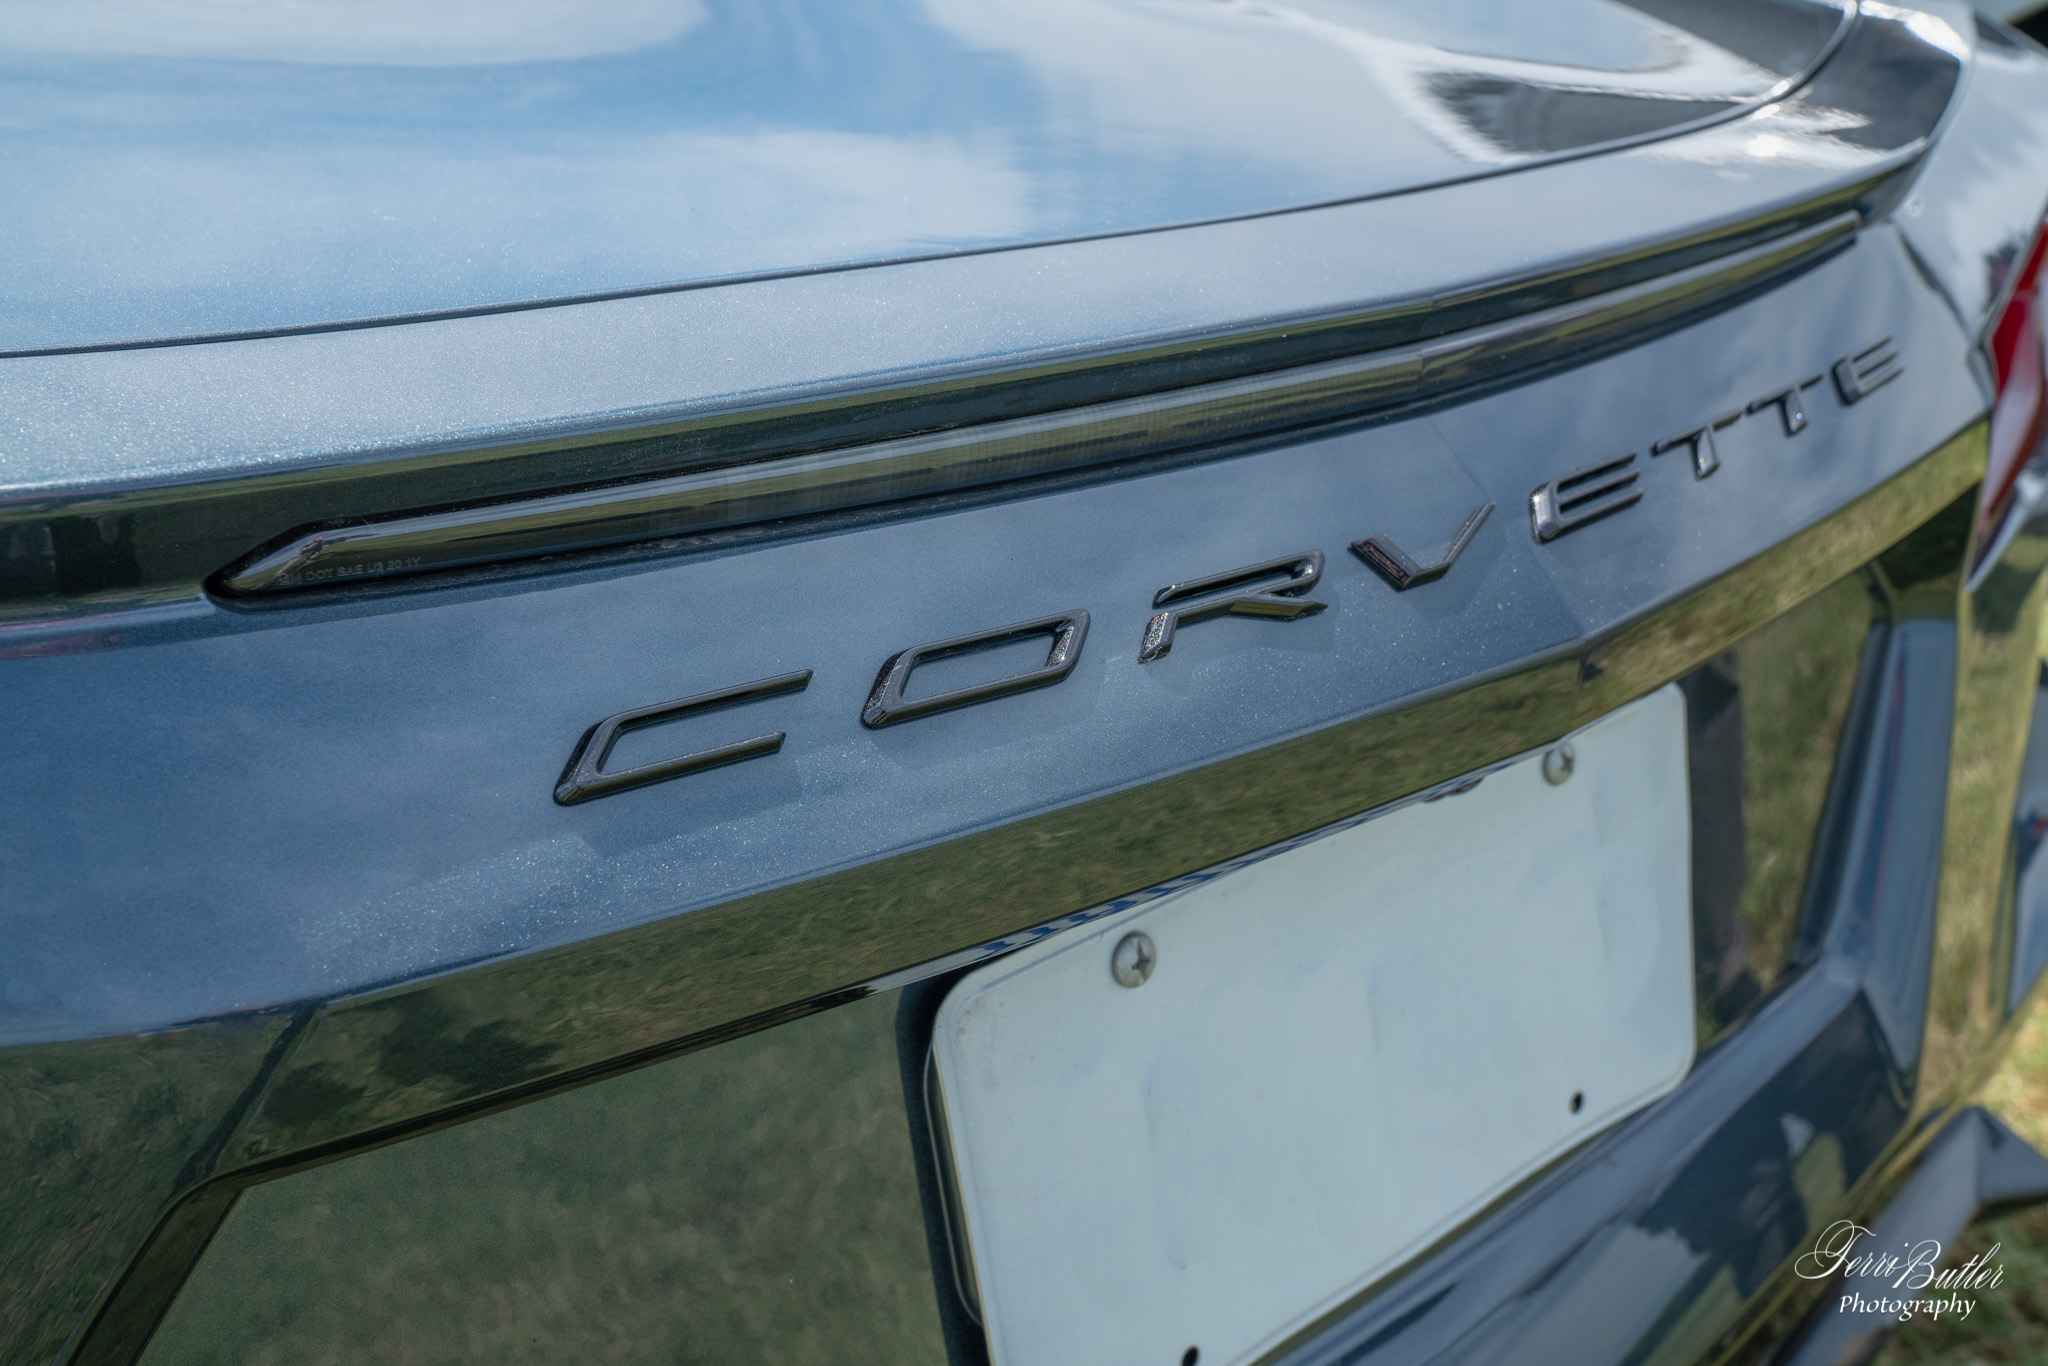 More Images of the C8 2020 Corvette Stingray